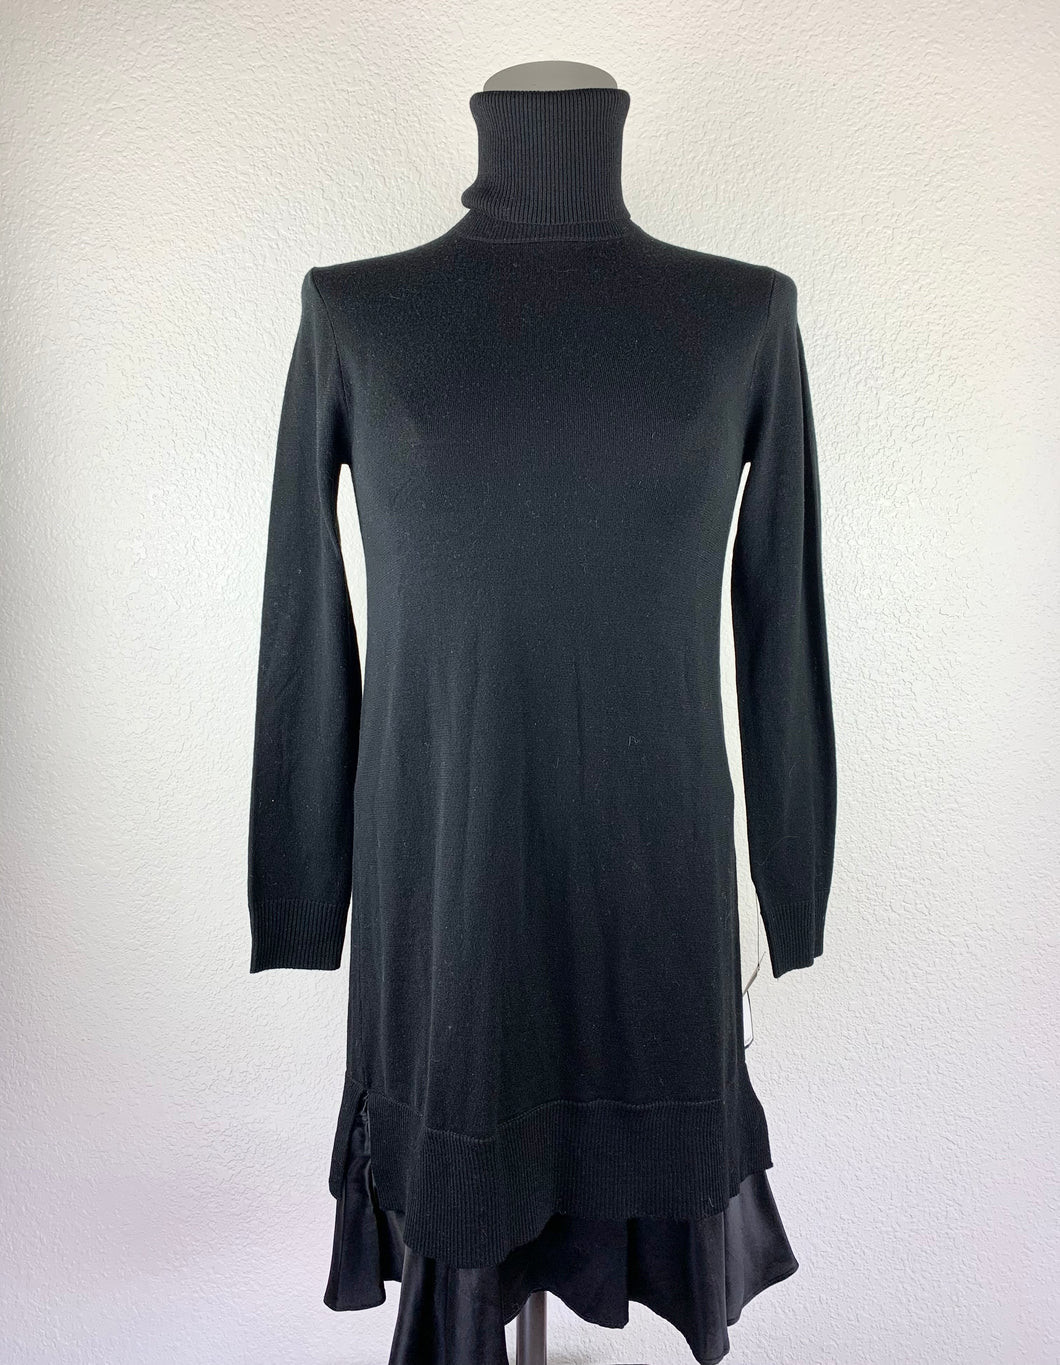 Ralph Lauren Turtleneck Dress size XS